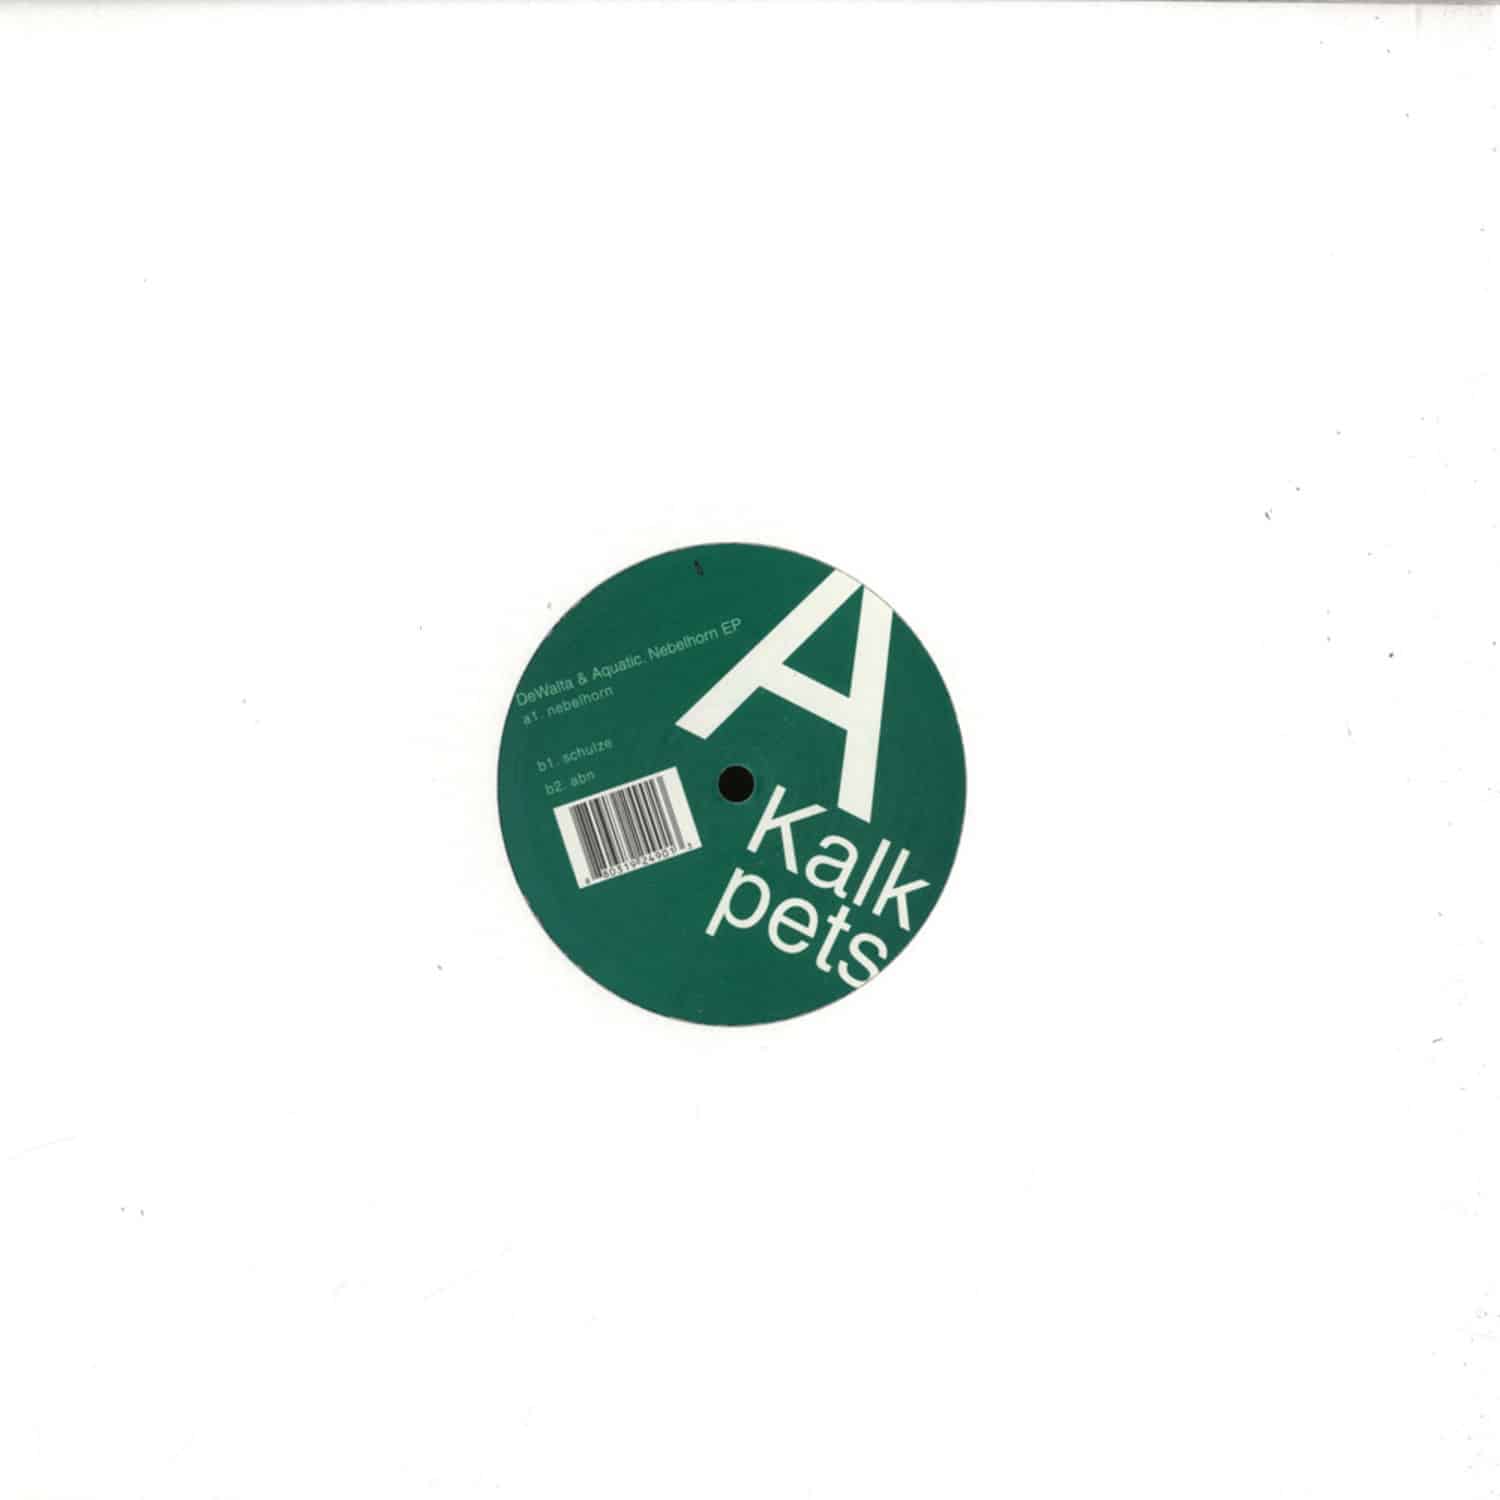 Dewalta / Aquatic - NEBELHORN EP